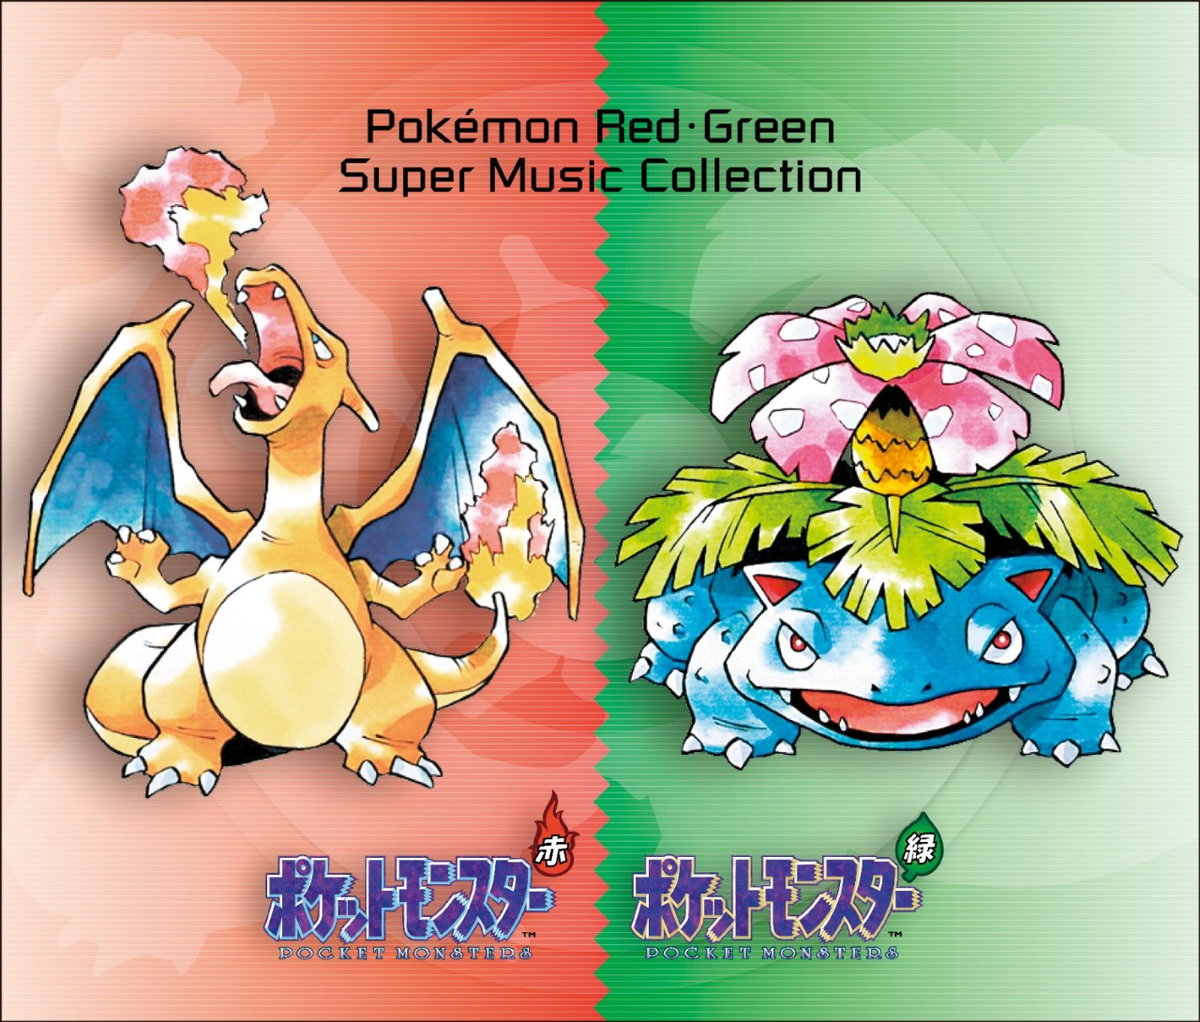 Pokemon Red Pokemon Green Super Music Collection Bulbapedia The Community Driven Pokemon Encyclopedia